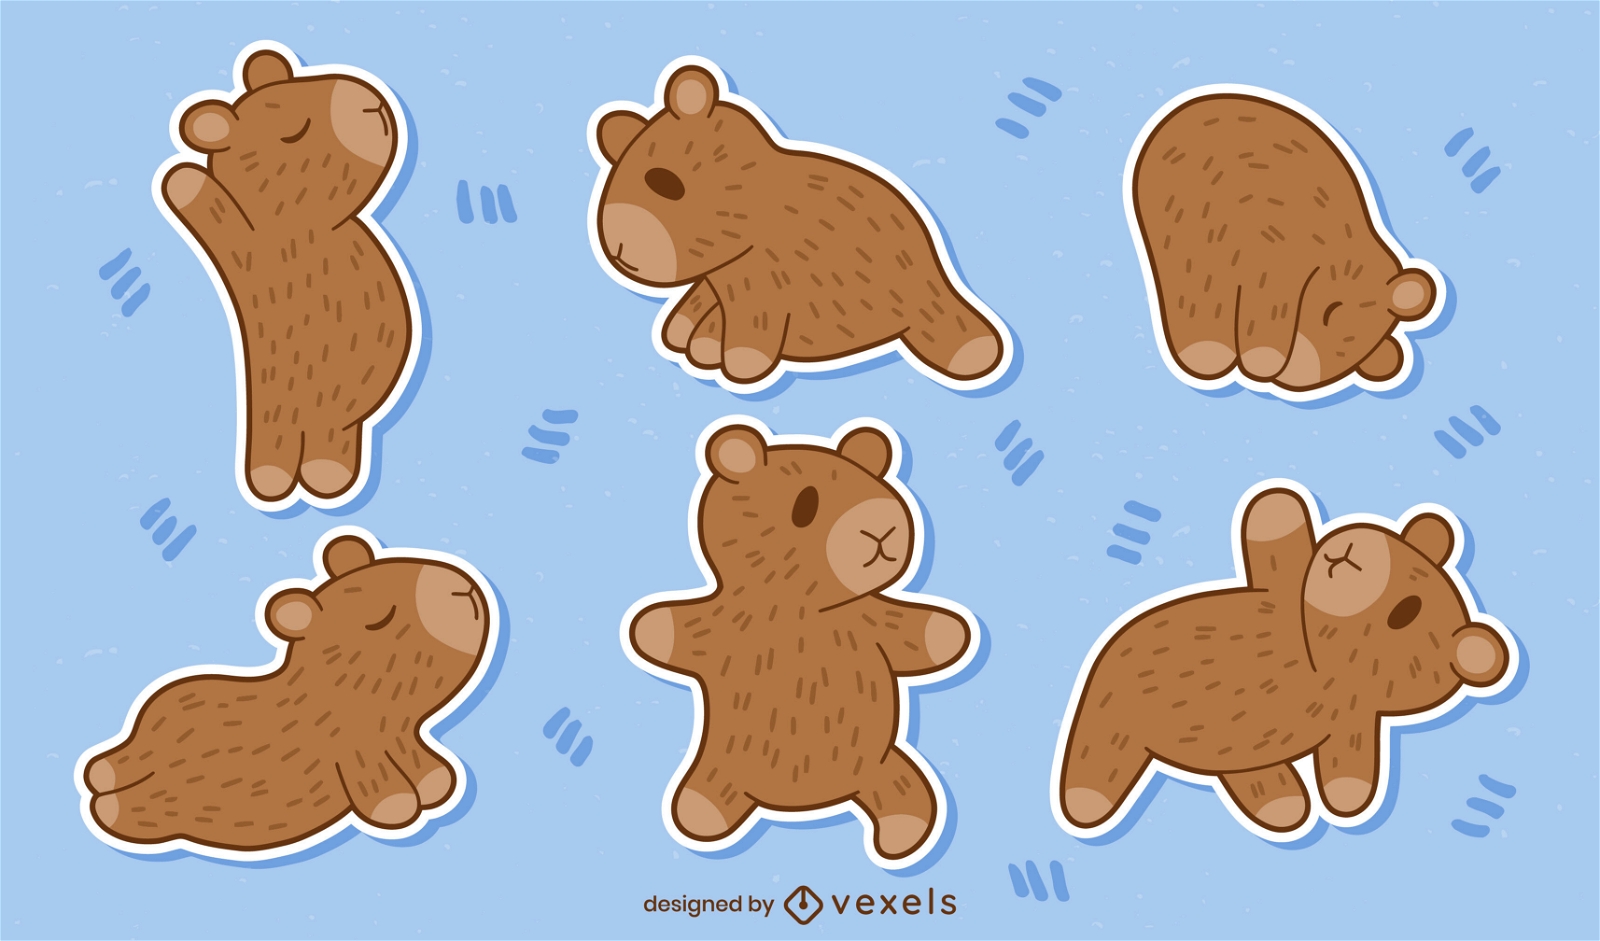 Capybara yoga character set